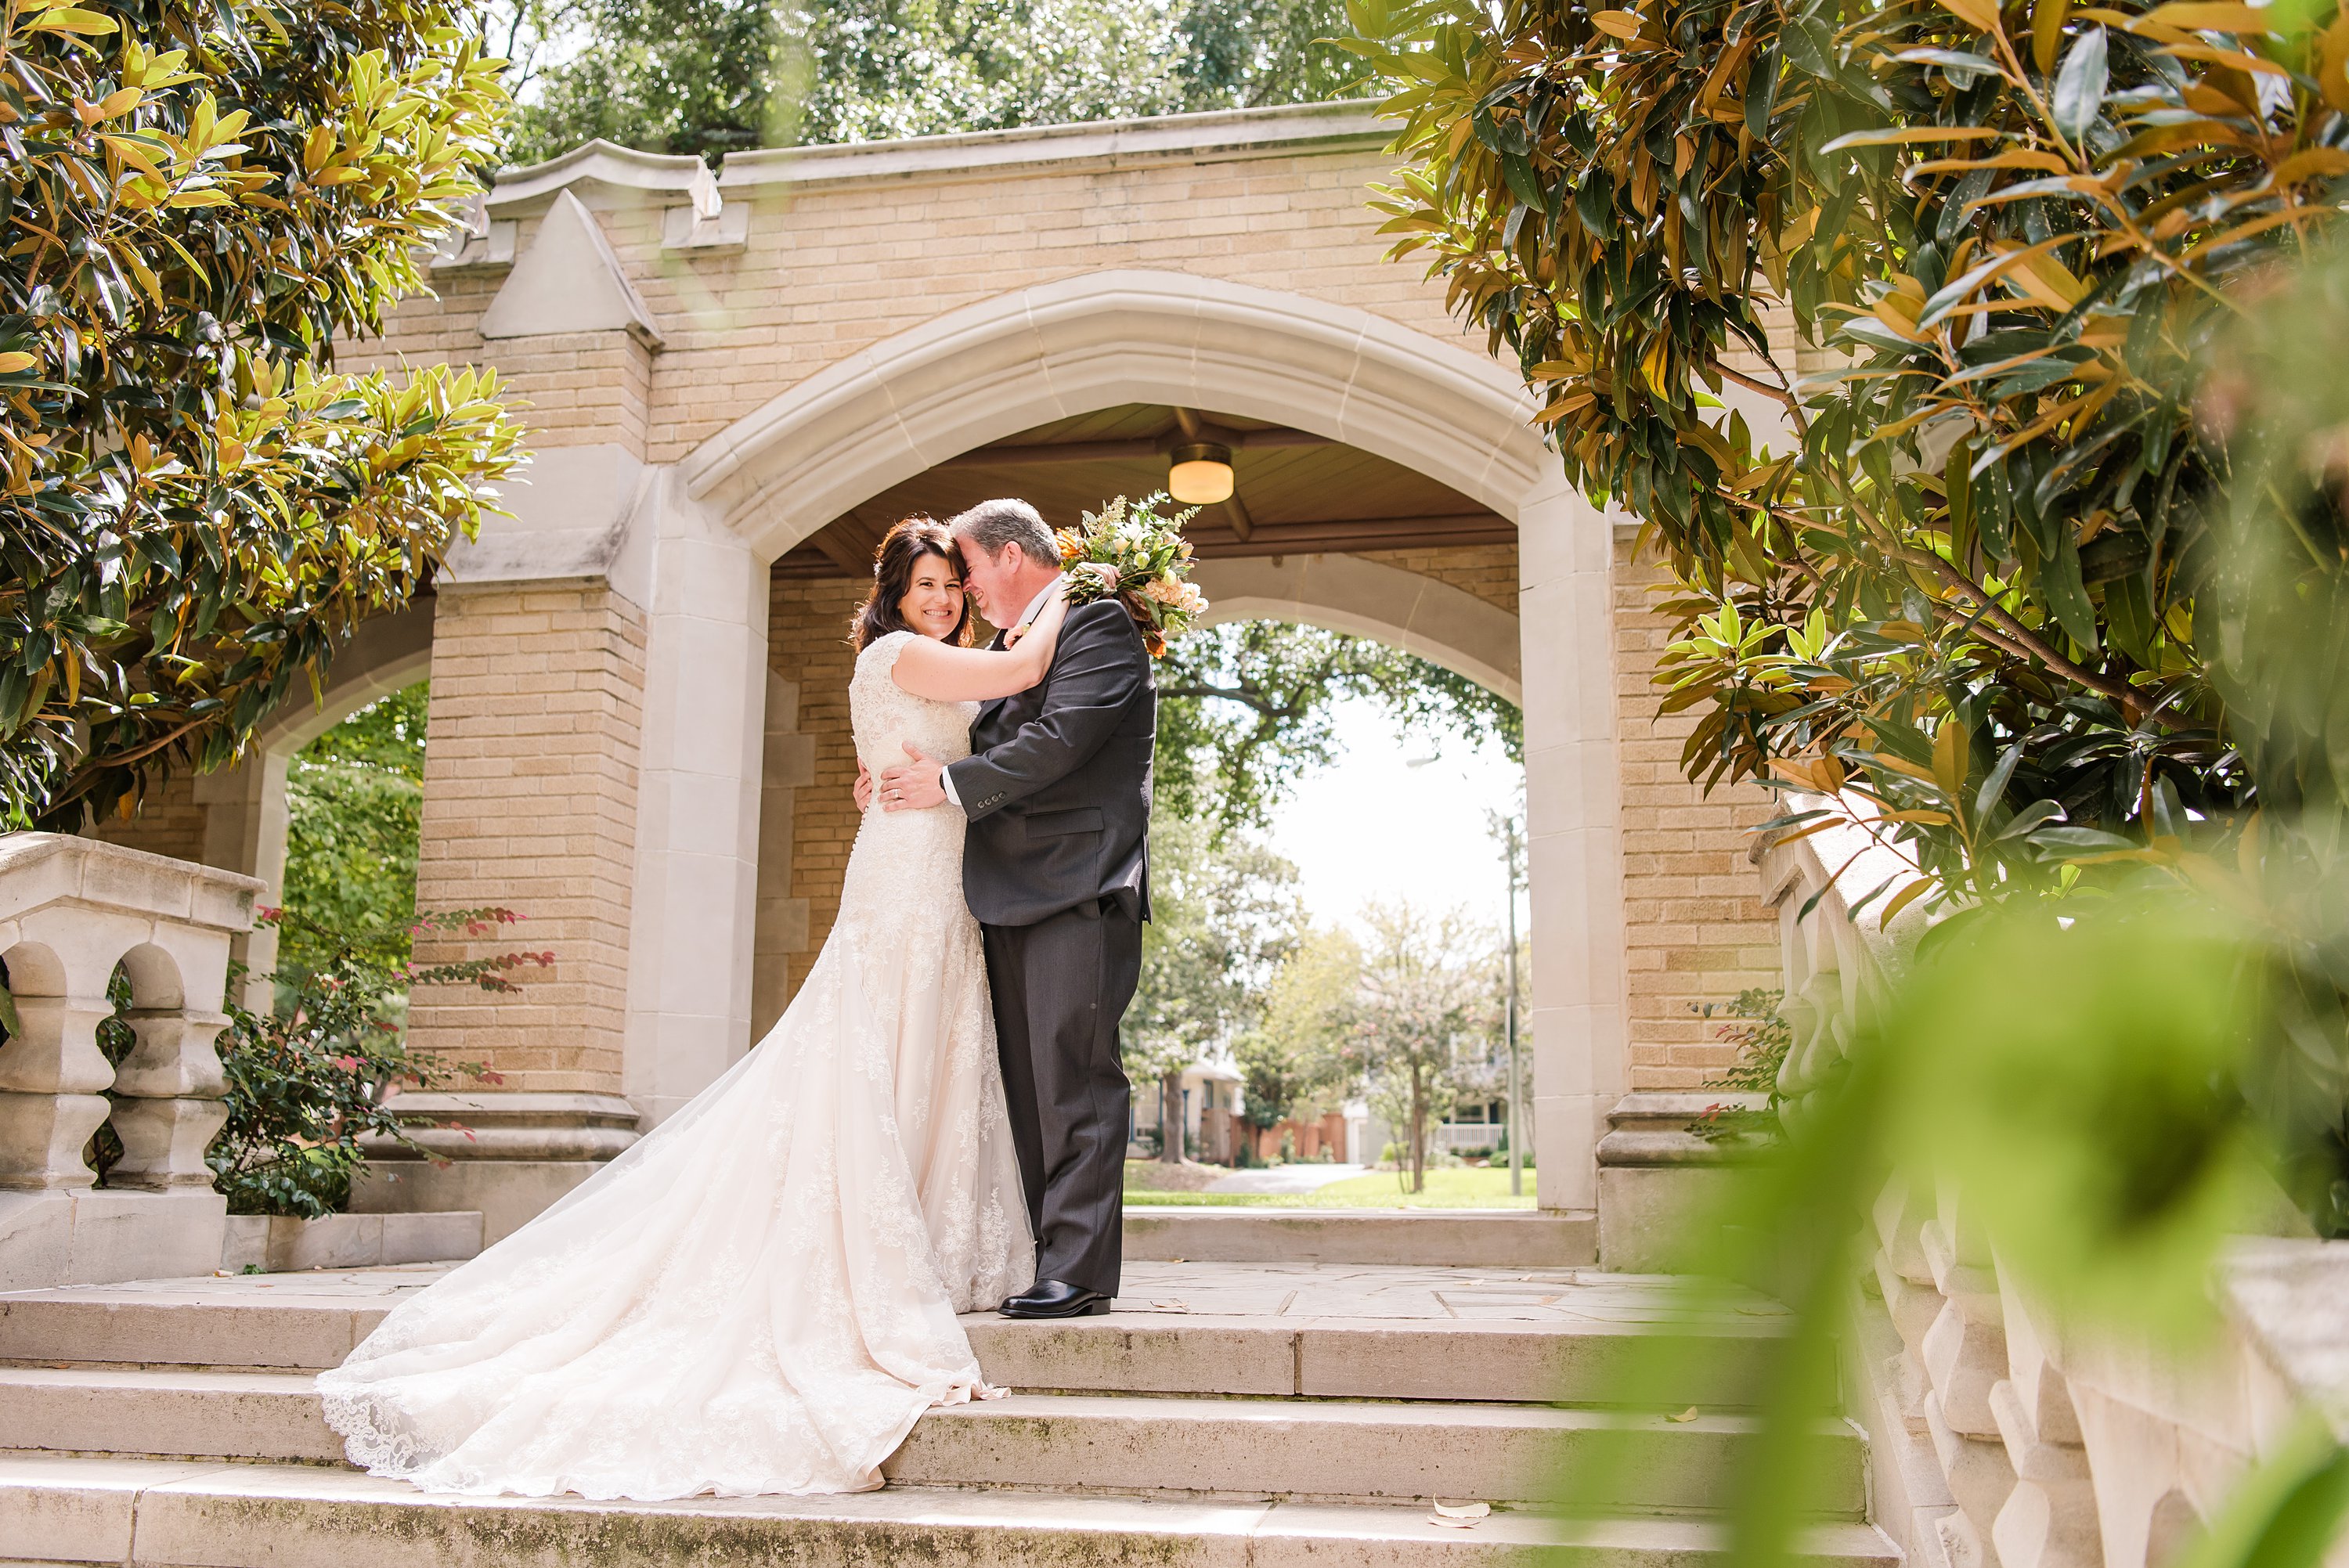 Highland Park Presbyterian Church – Dallas Wedding Photography